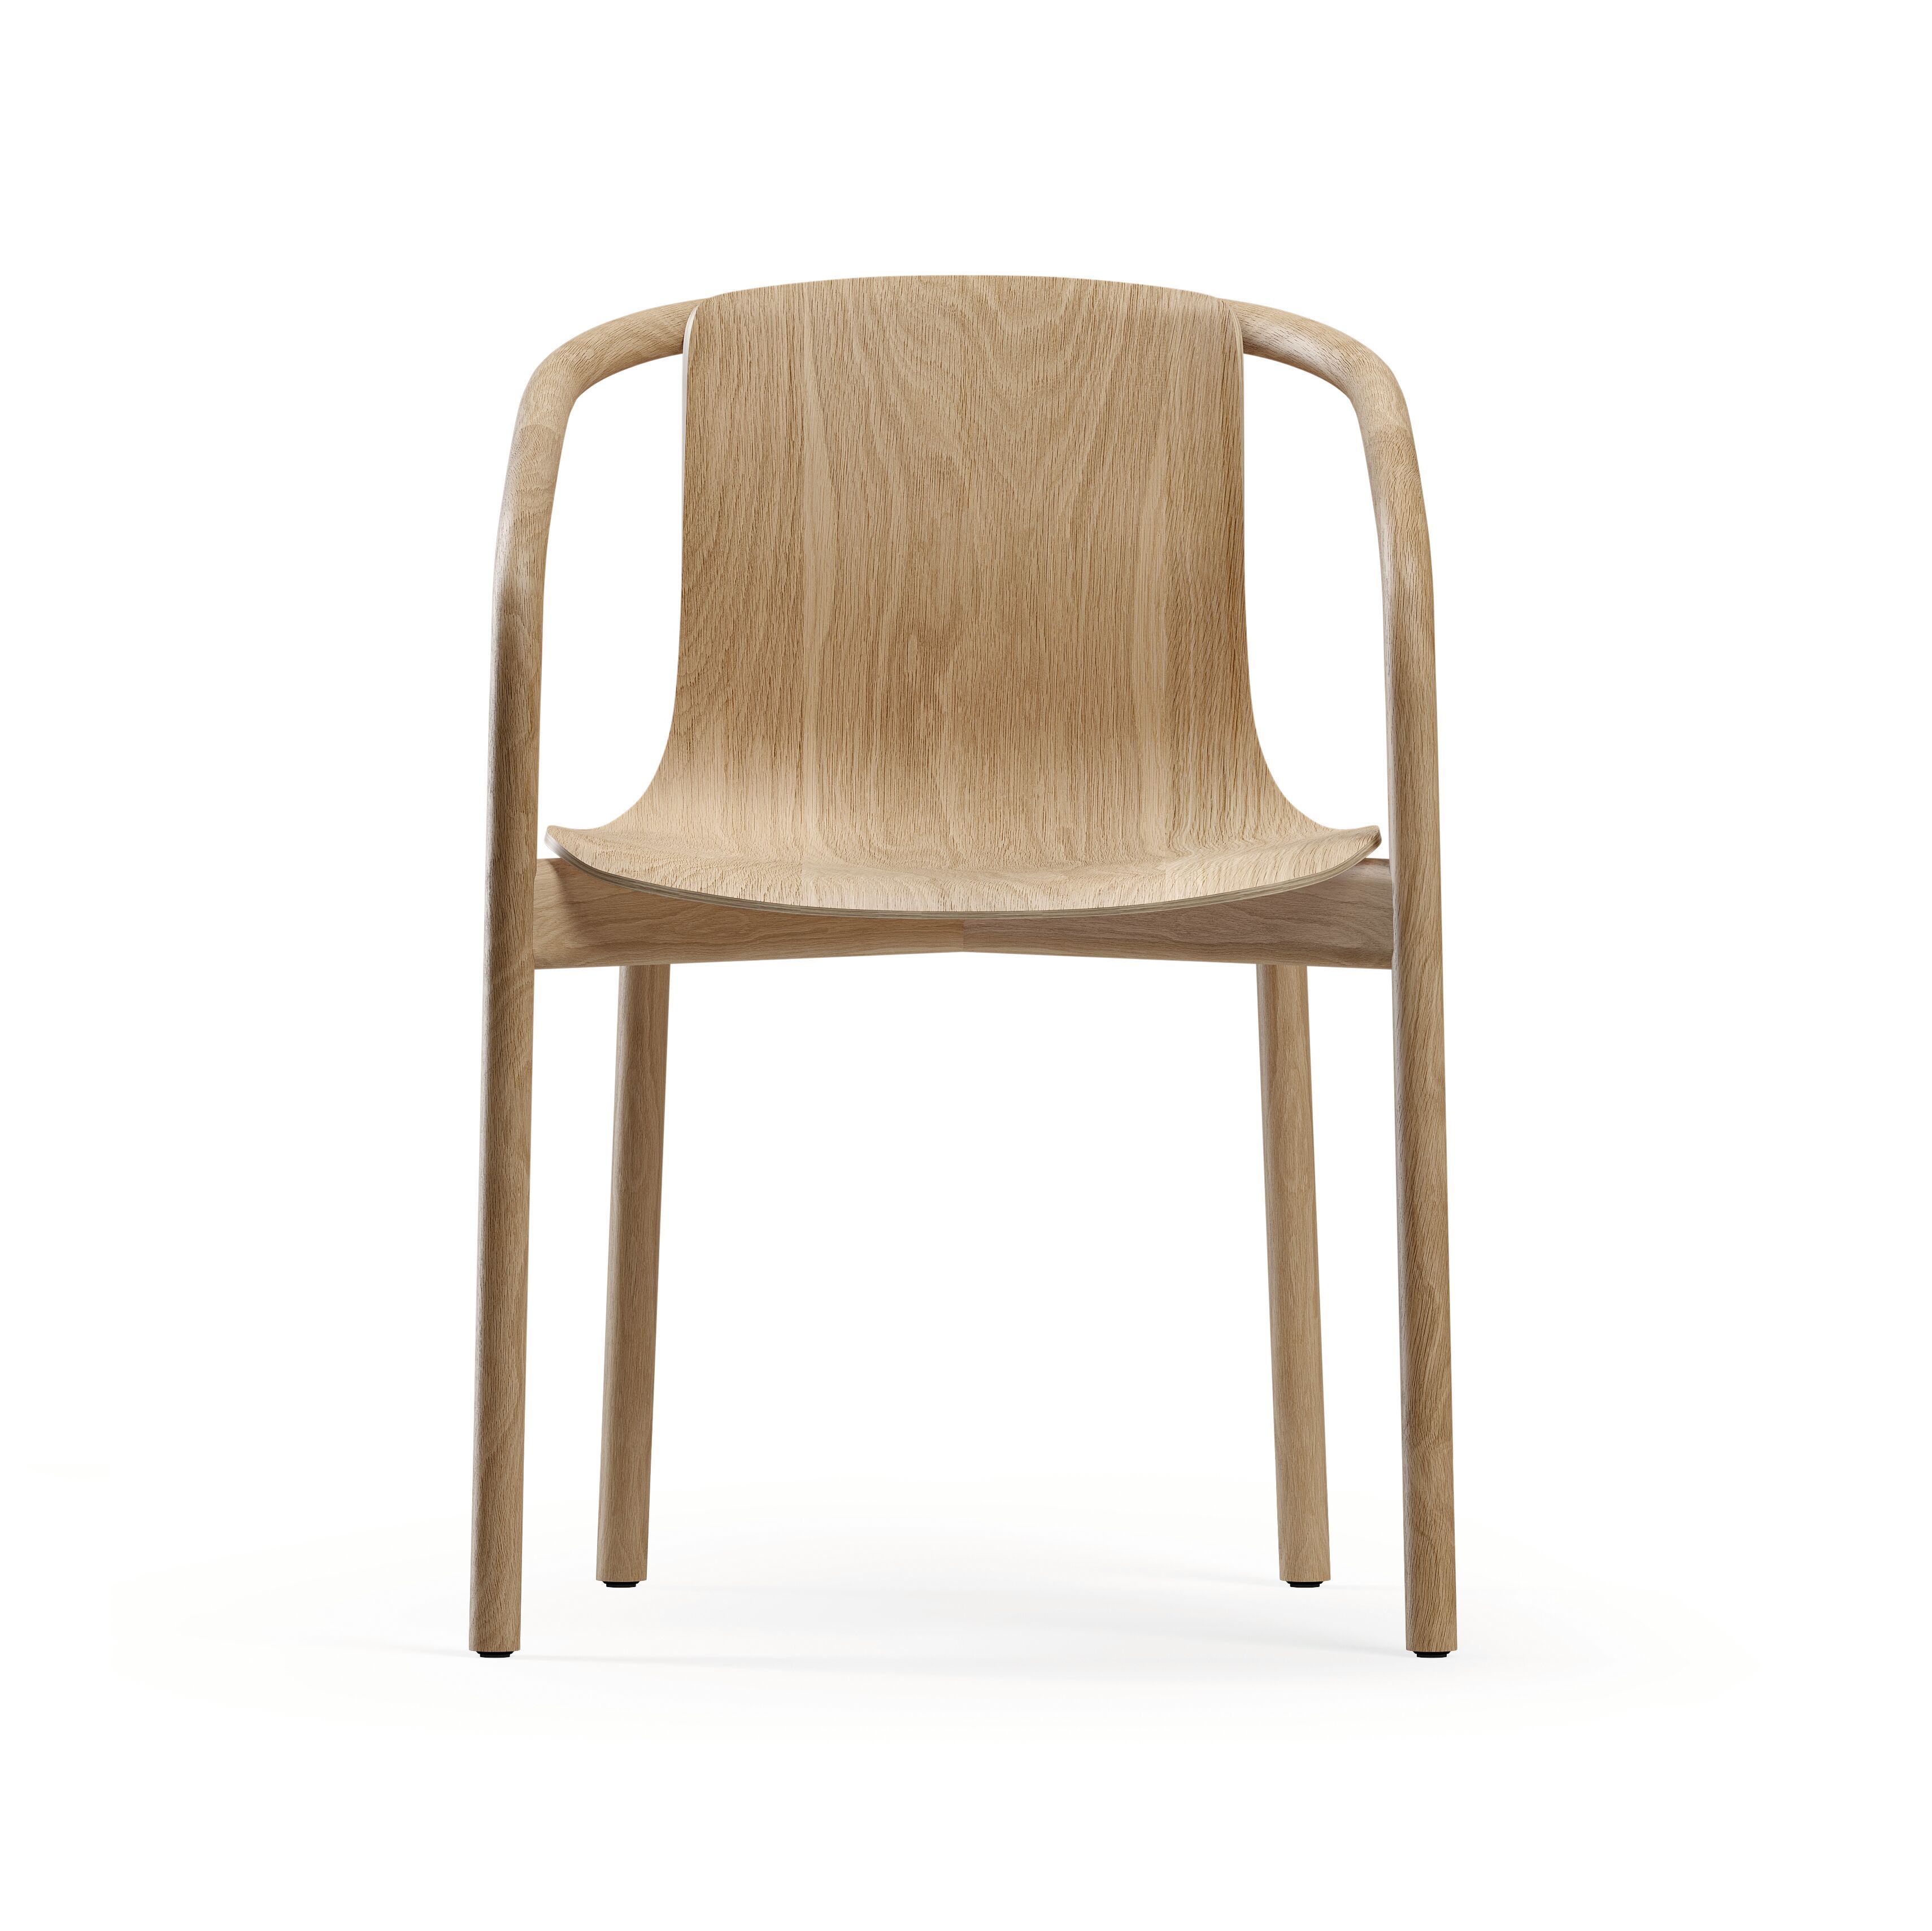 WK-Foster Chair-001.tif